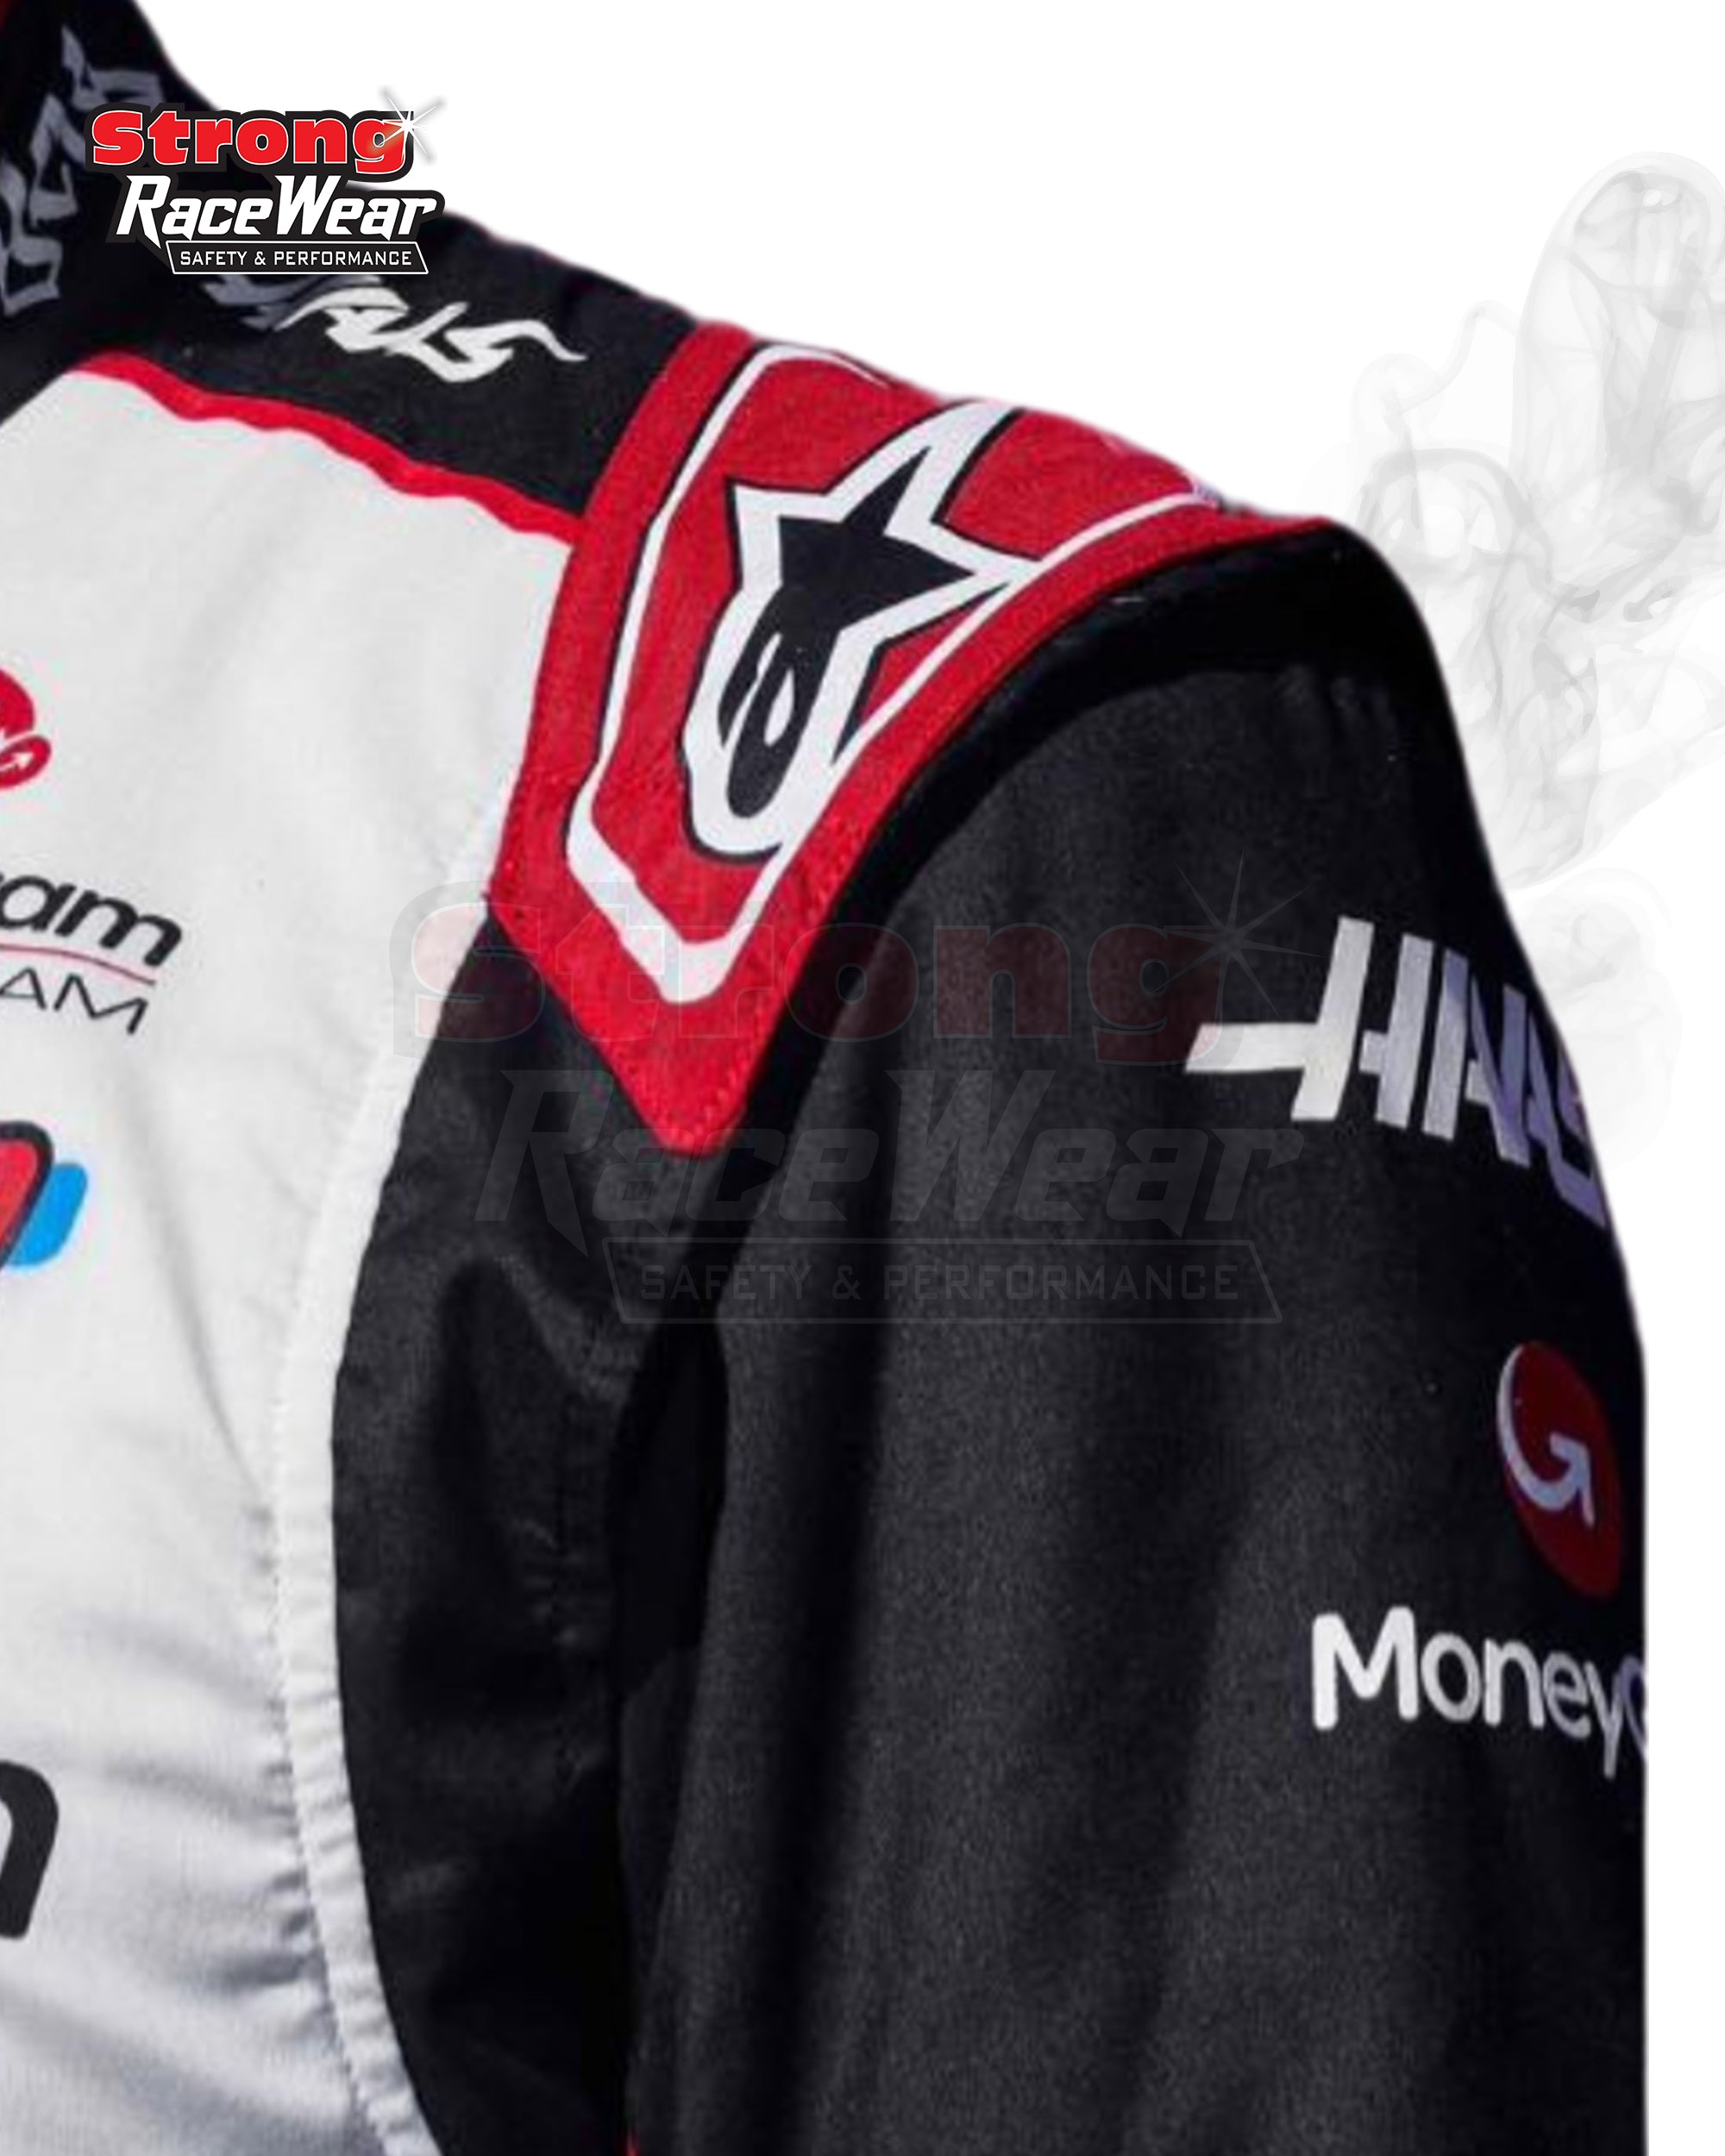 Kevin Magnussen 2024 Race Suit F1 Team Haas Replica Suit